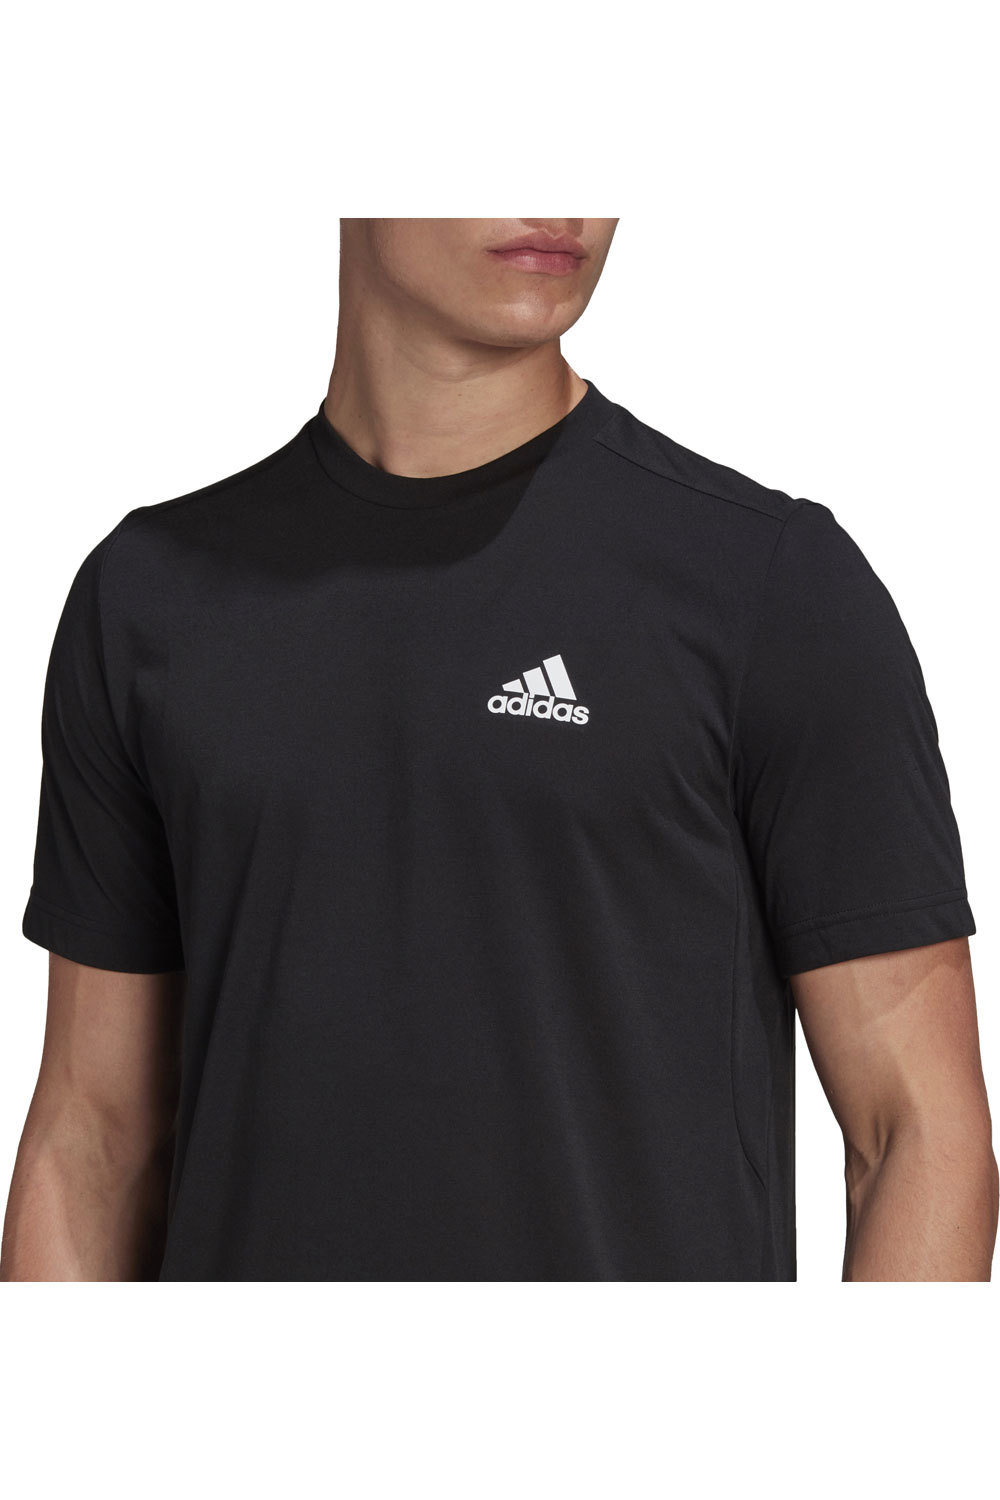 adidas camiseta fitness hombre AEROREADY Designed 2 Move Feelready Sport vista detalle